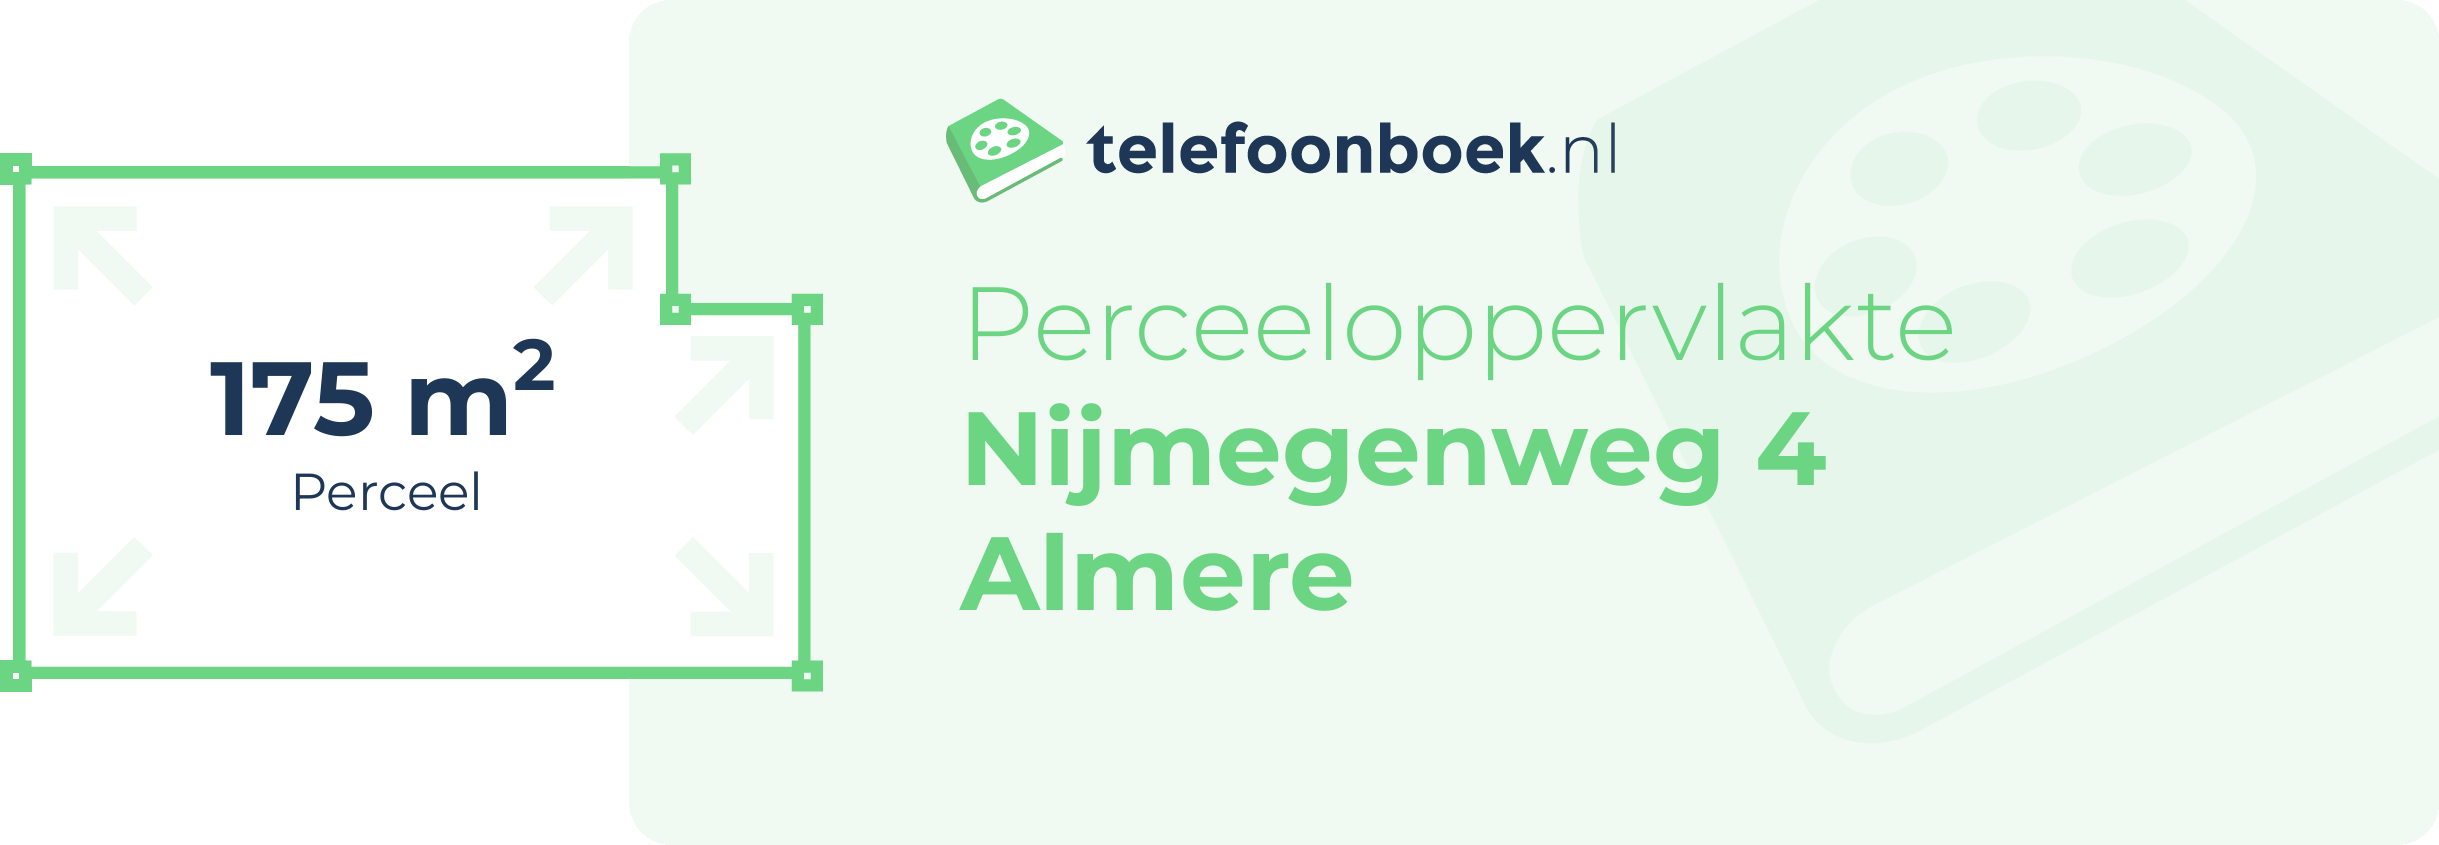 Perceeloppervlakte Nijmegenweg 4 Almere